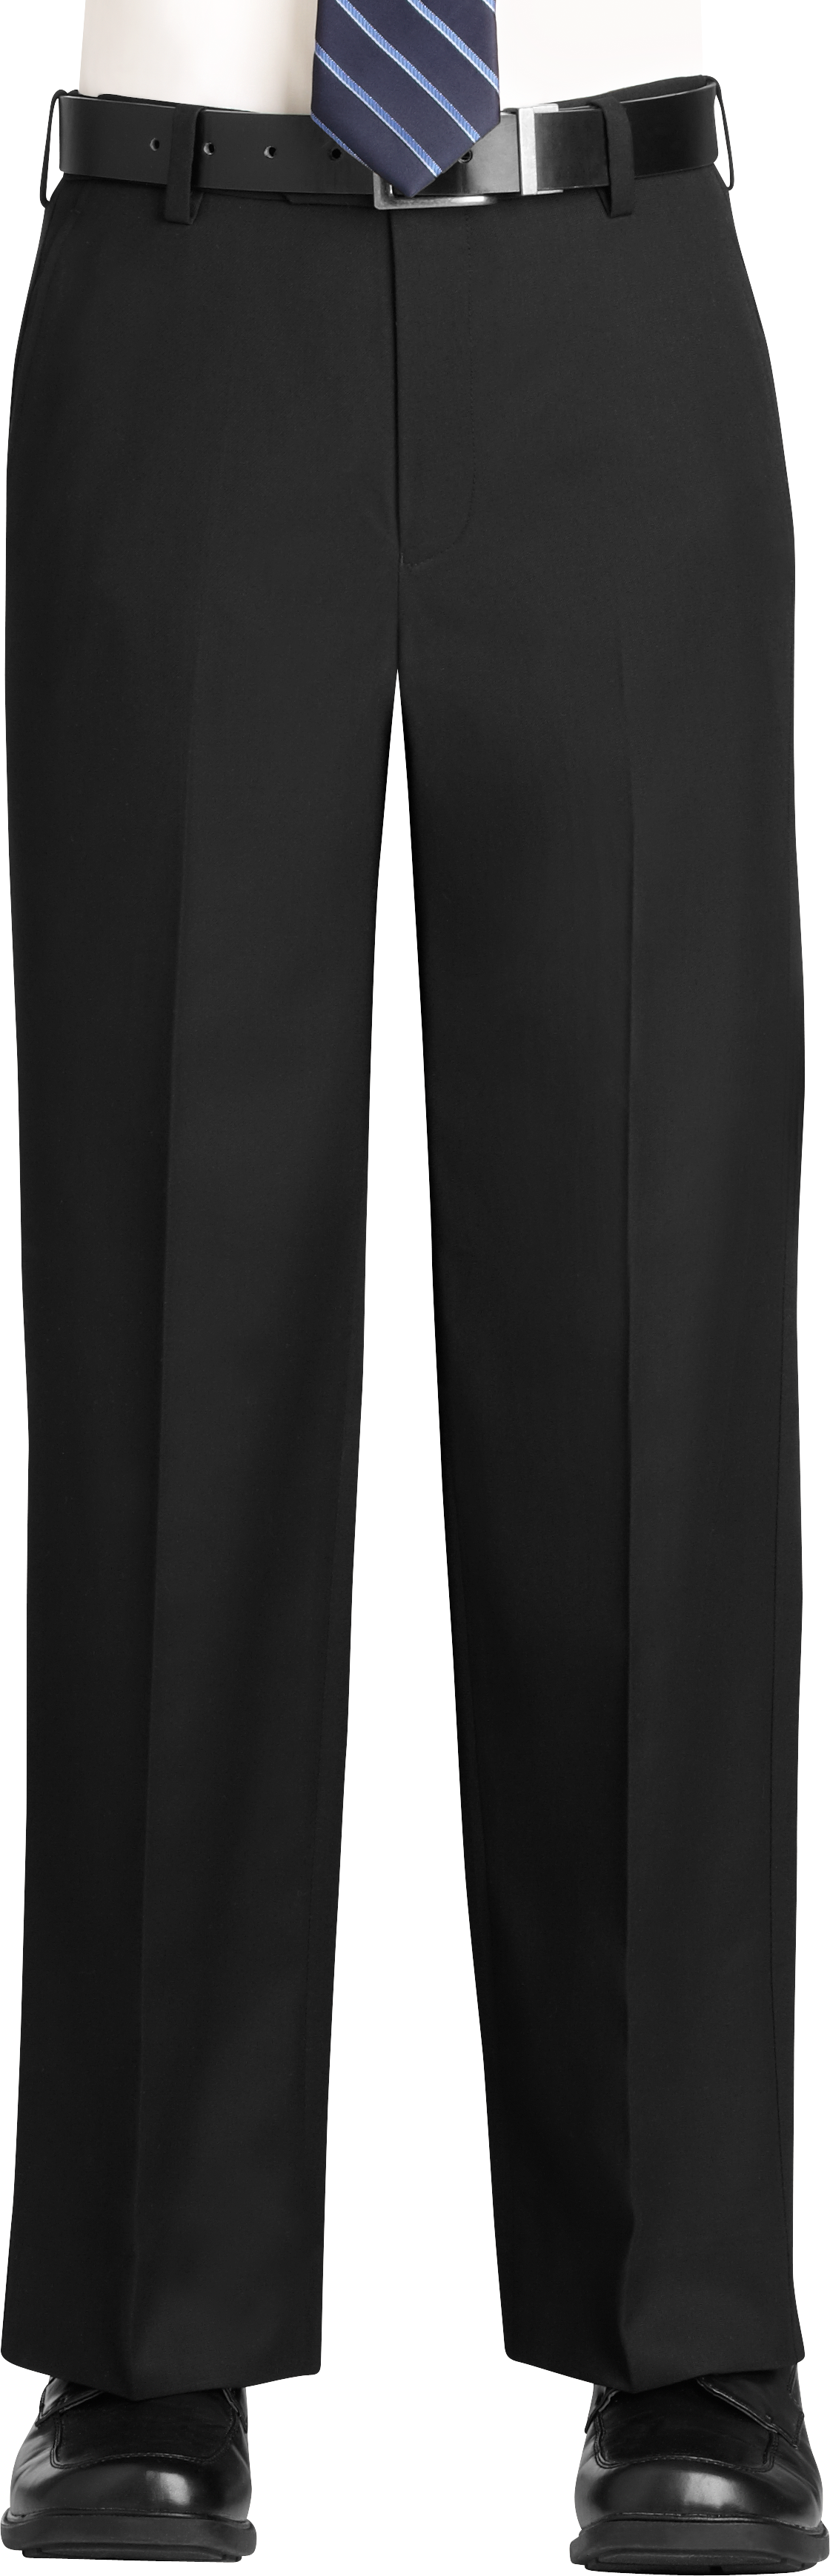 michael kors black dress pants